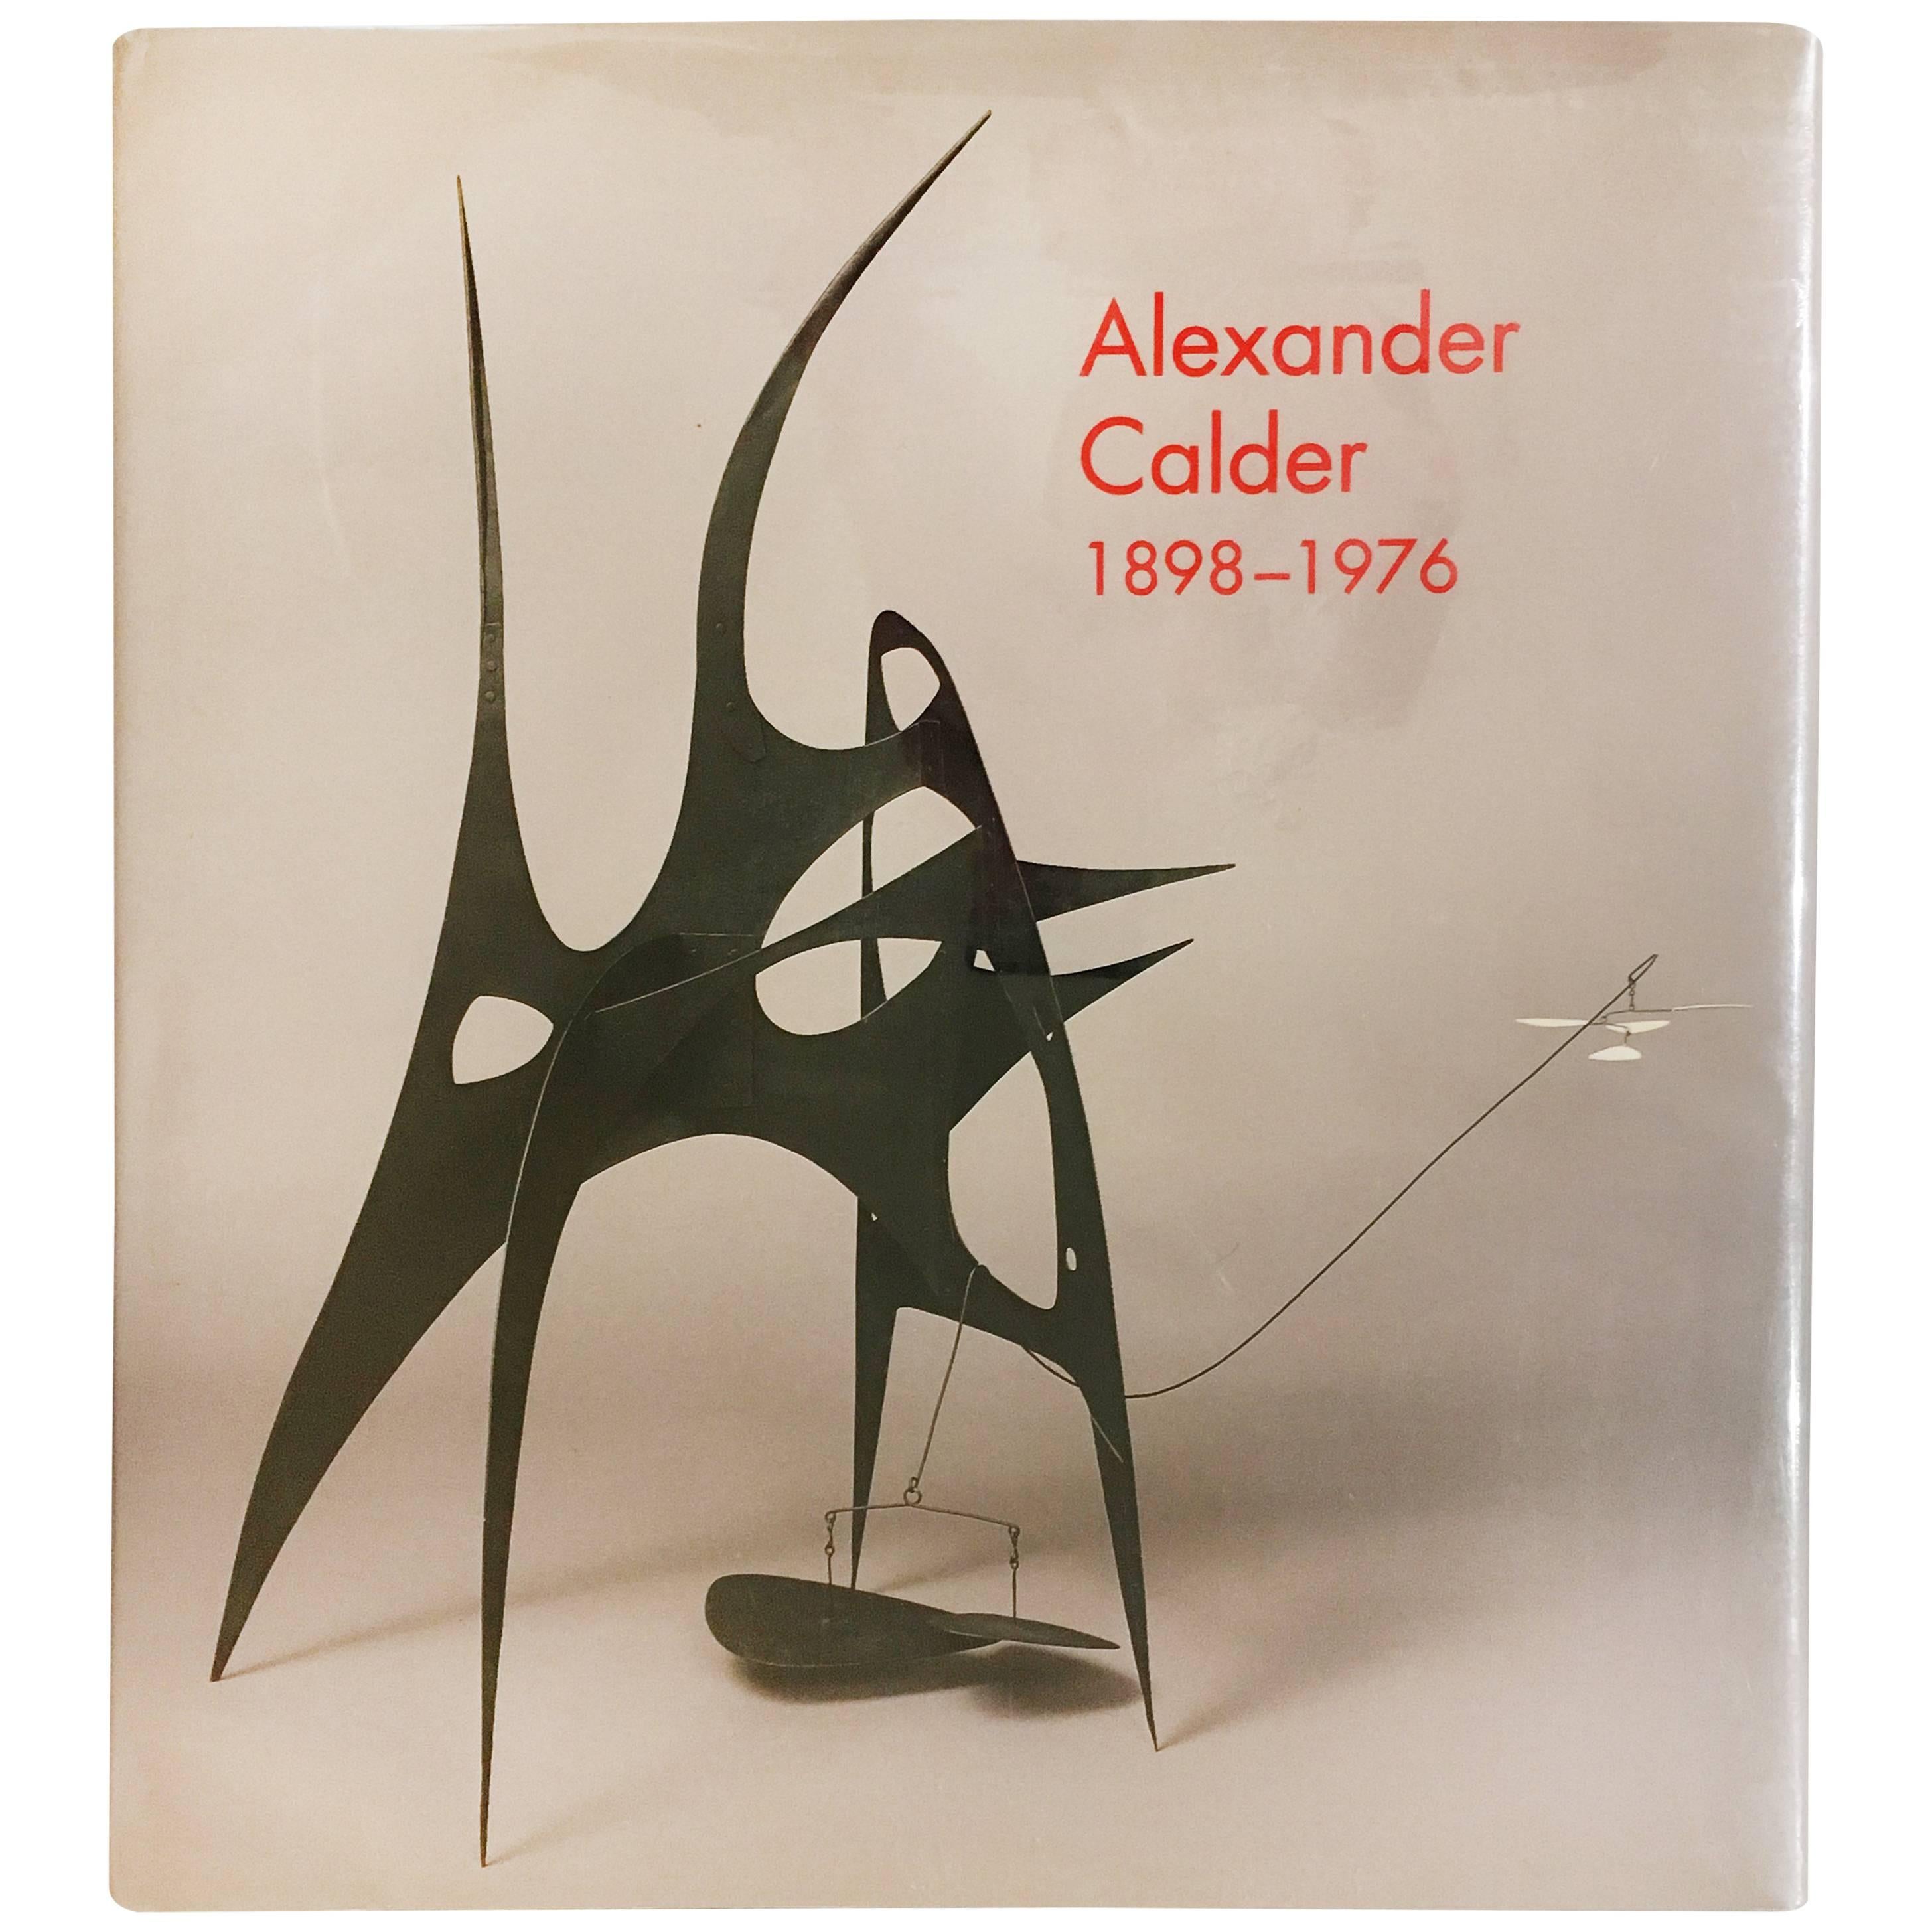 "Alexander Calder 1898-1976" Book